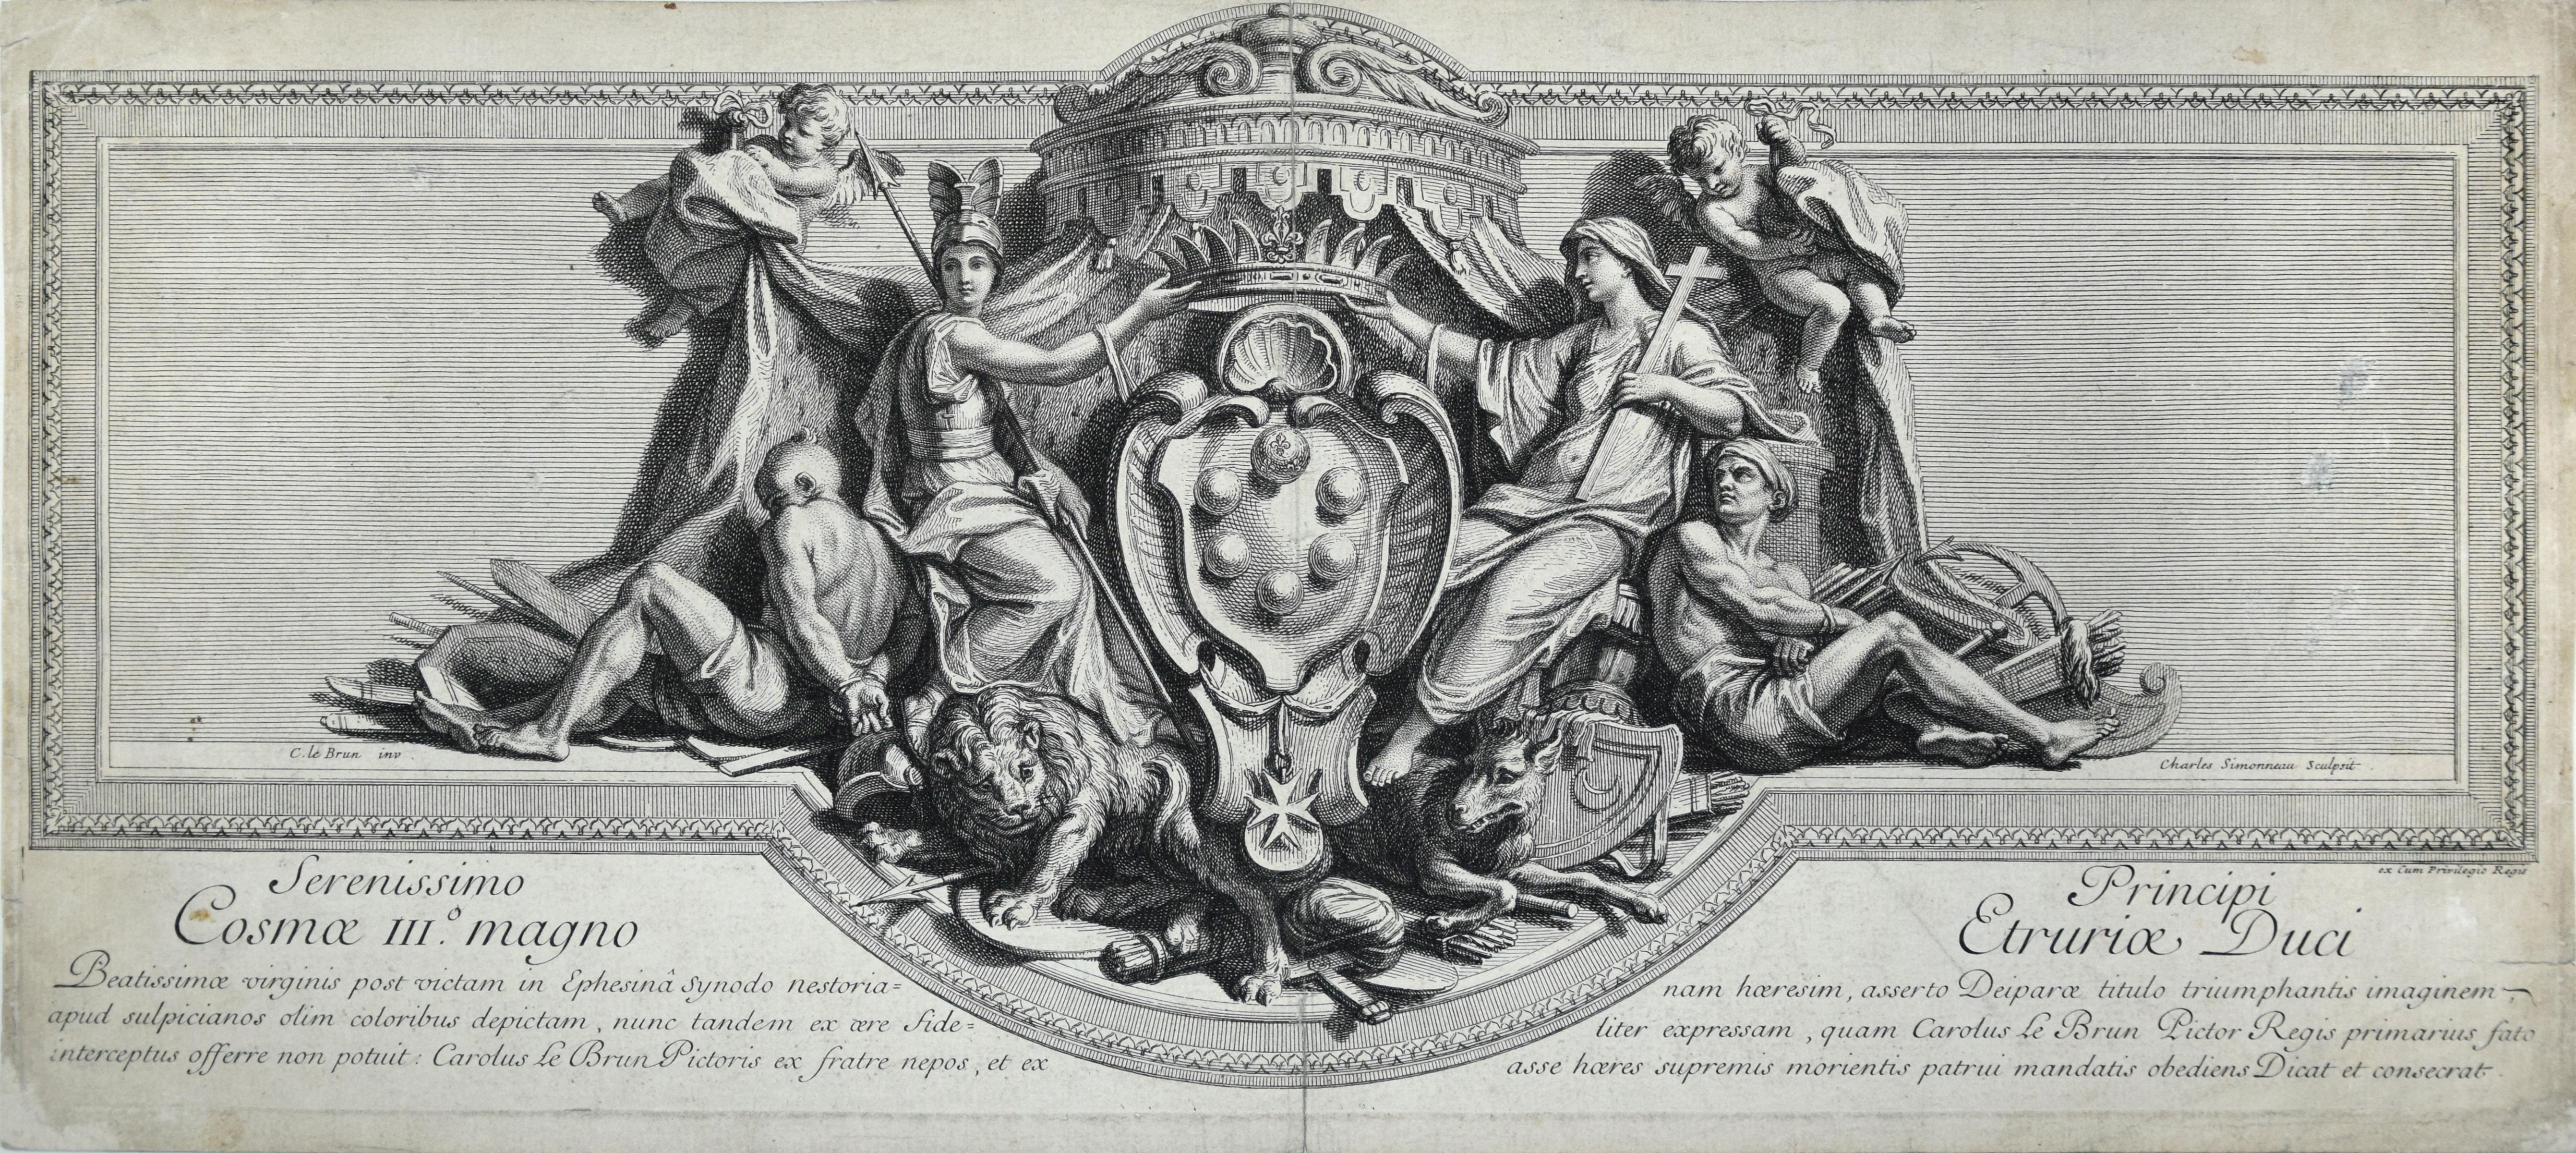 Principi Etruriae Duci - eau-forte de Charles Simonneau - fin 1600